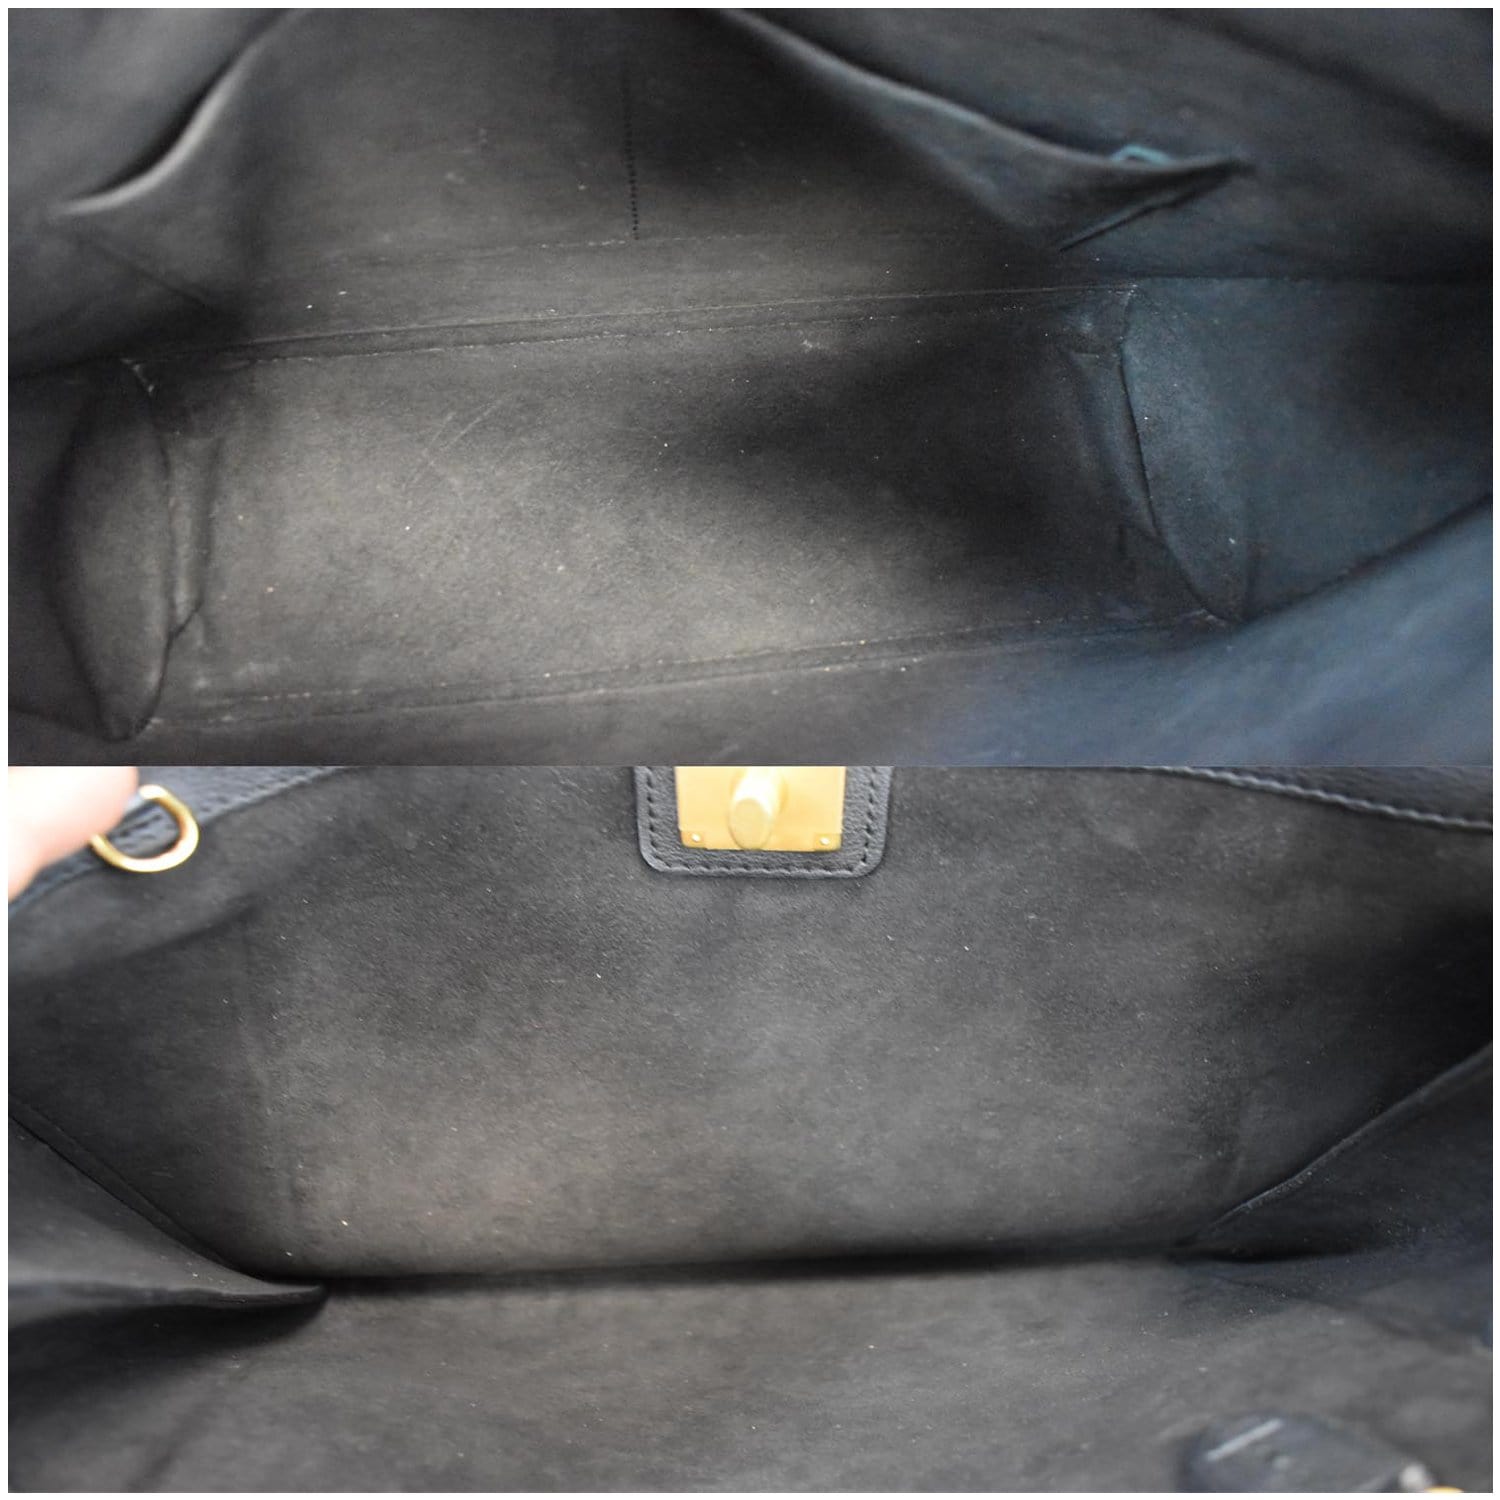 Louis Vuitton Chataigne Calfskin Leather Lockme Shopper Tote Bag